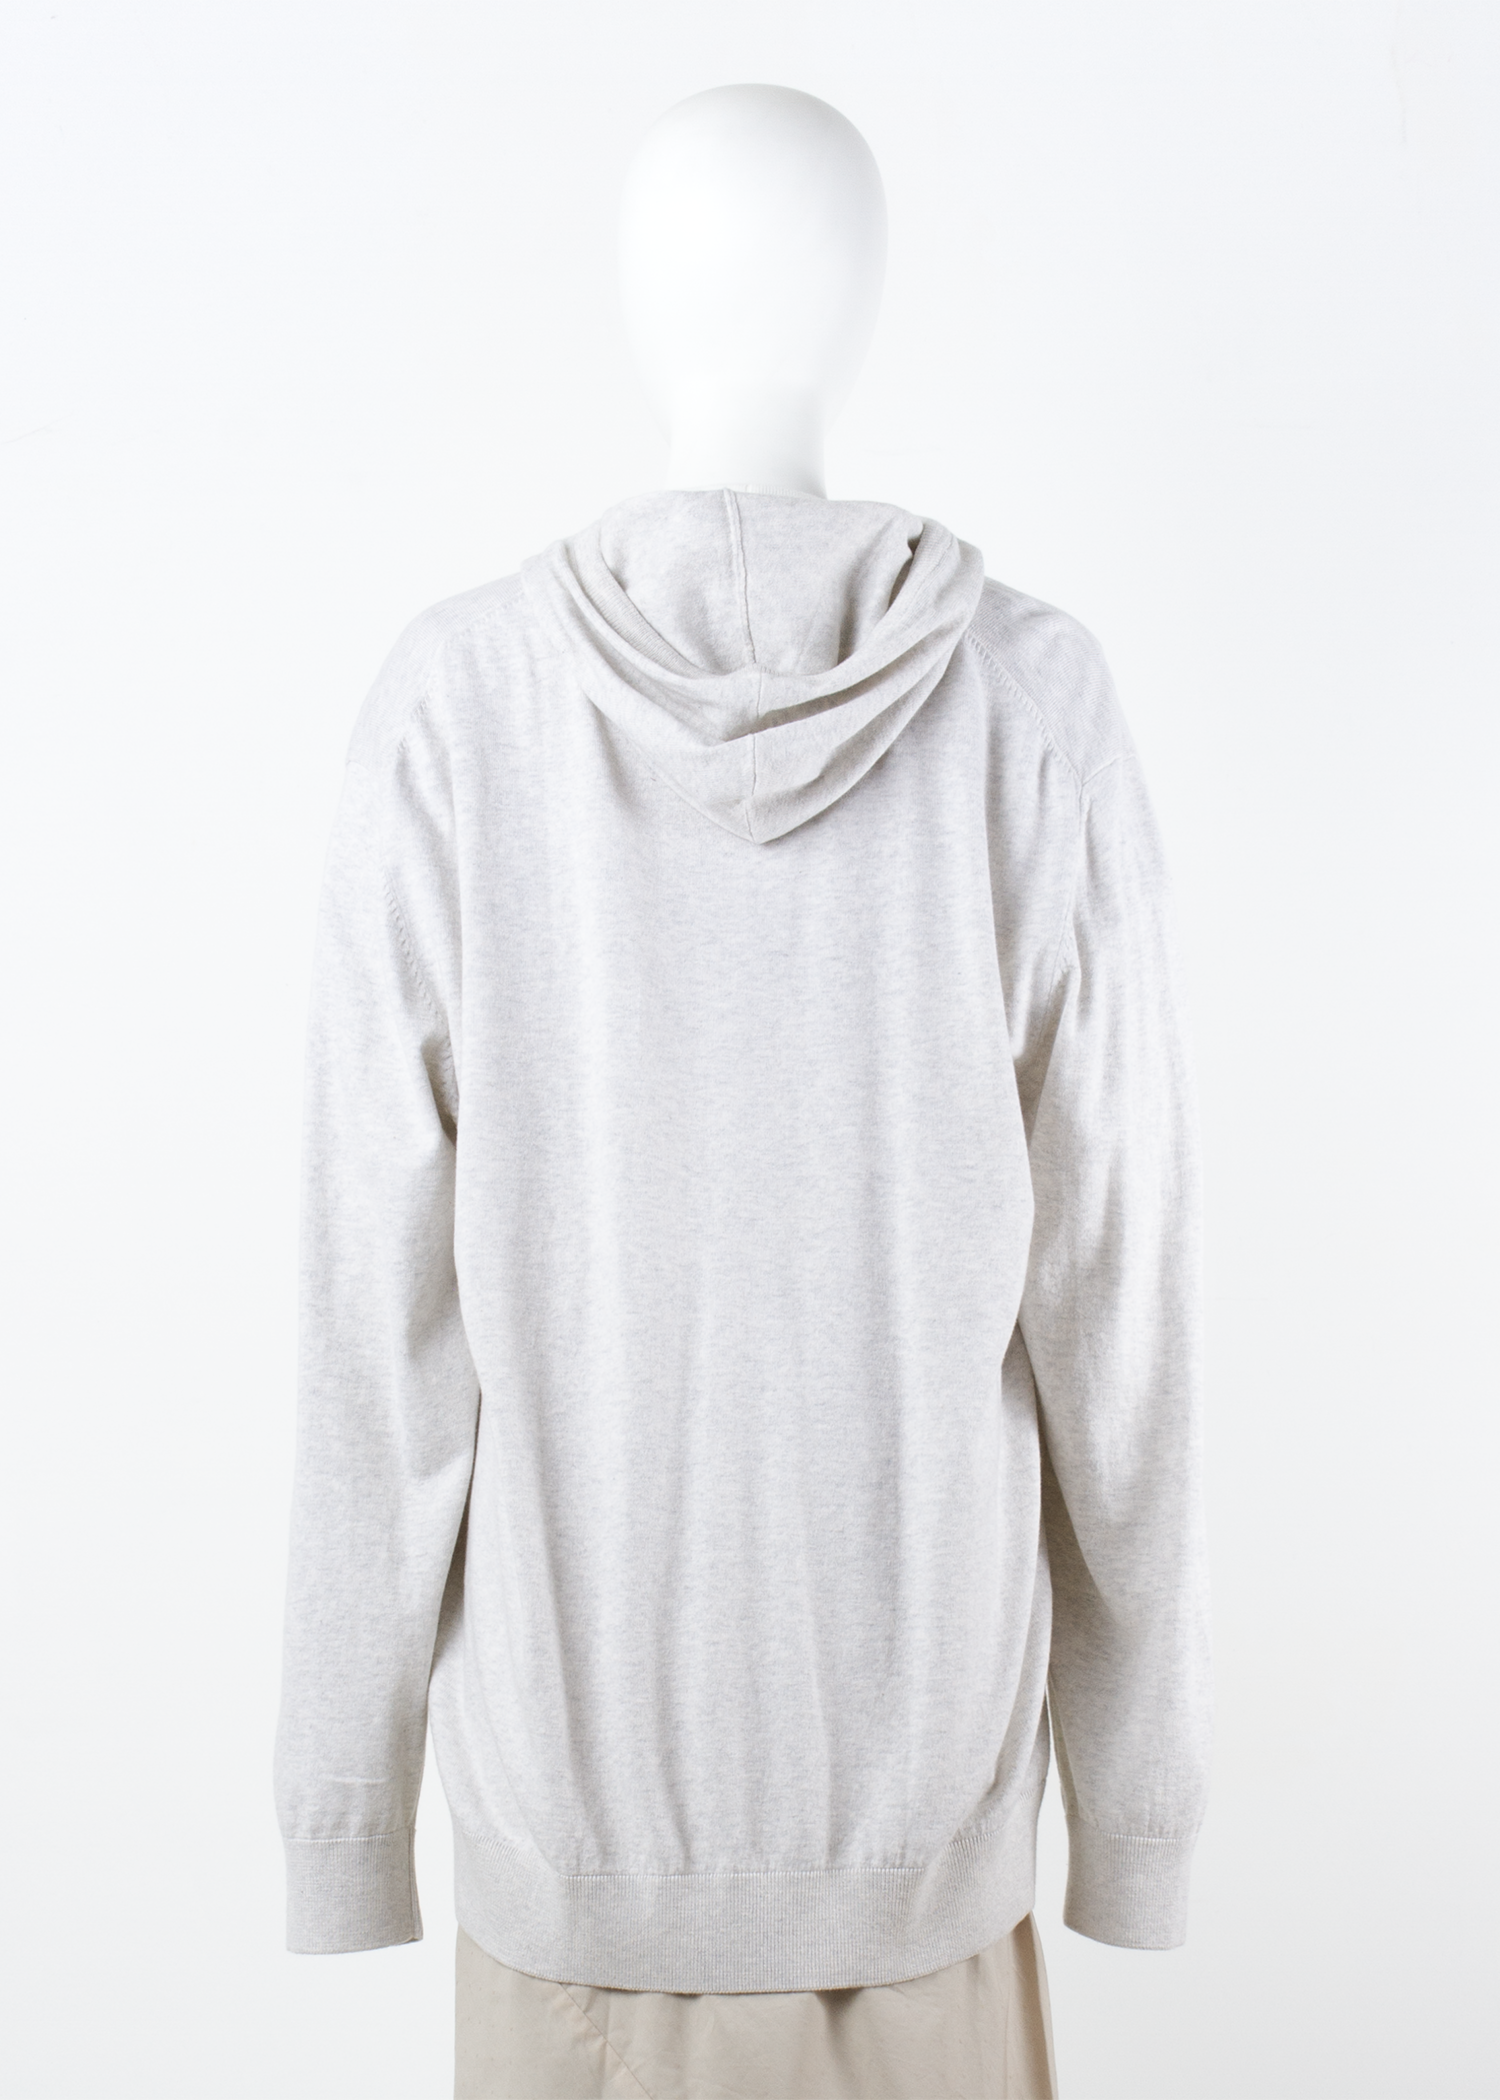 slump sweater - white heather